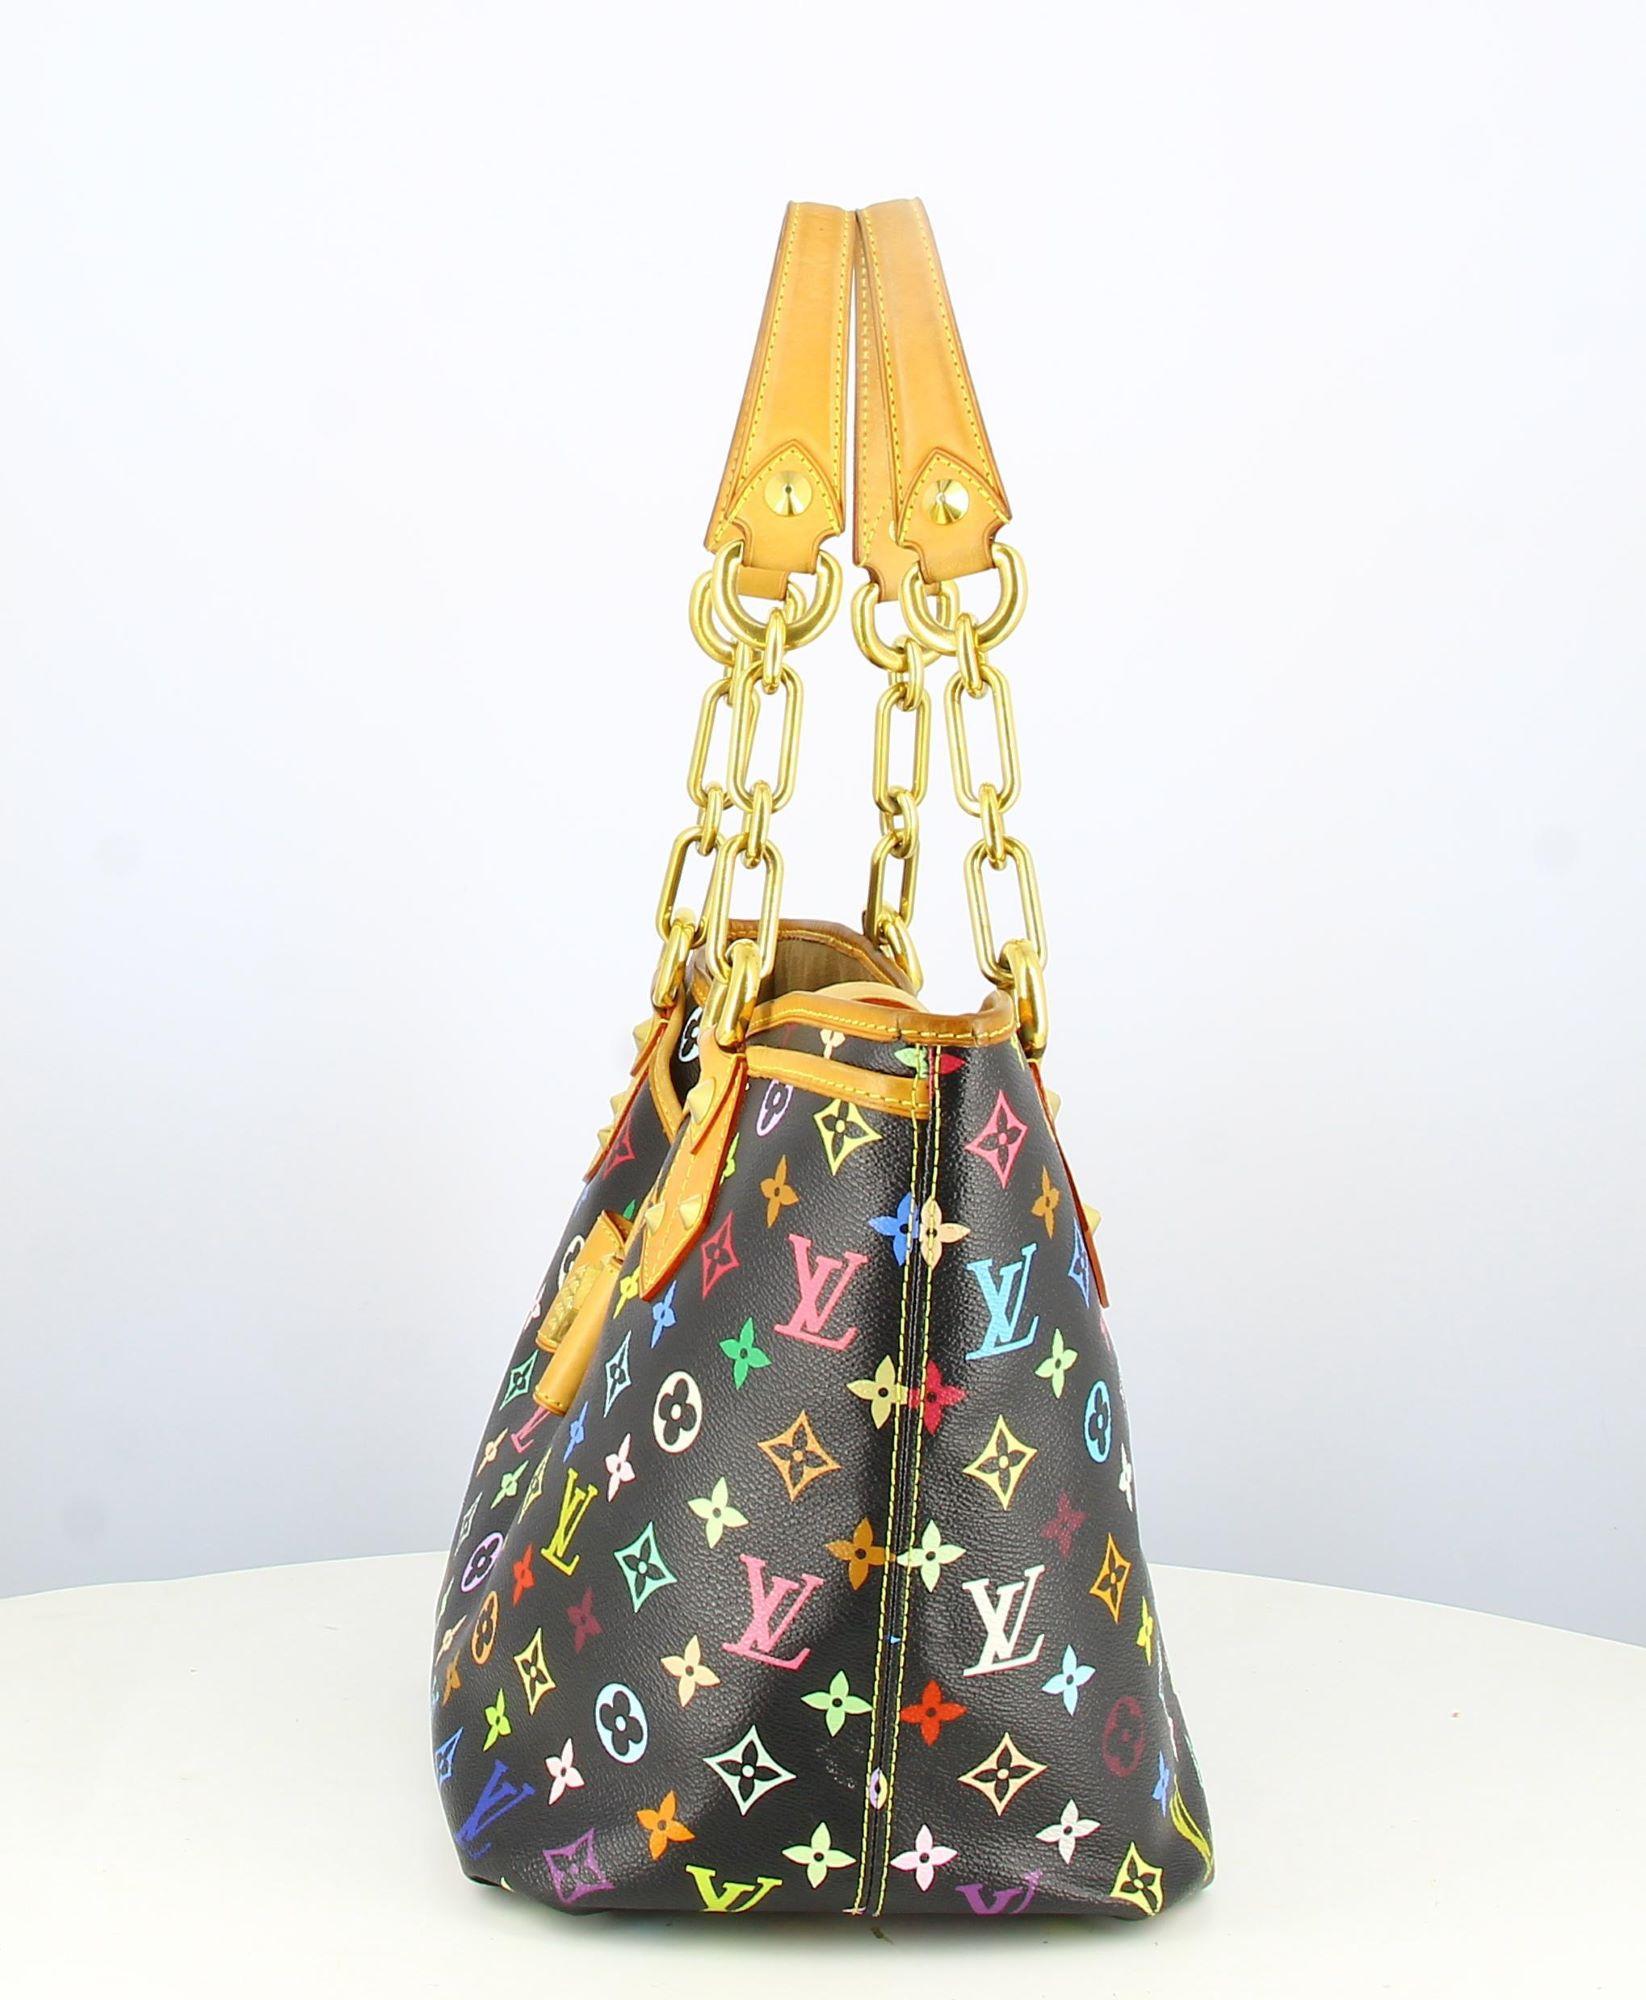 2011 Louis Vuitton x Takashi Morakami Handbag Monogram multicolor

- Good condition. Shows slight traces of wear over time.
- Louis Vuitton Handbag, monogram multicolor
- Brown leather hanses
- Multicolour logo. Pocket on the front.
- Interior: